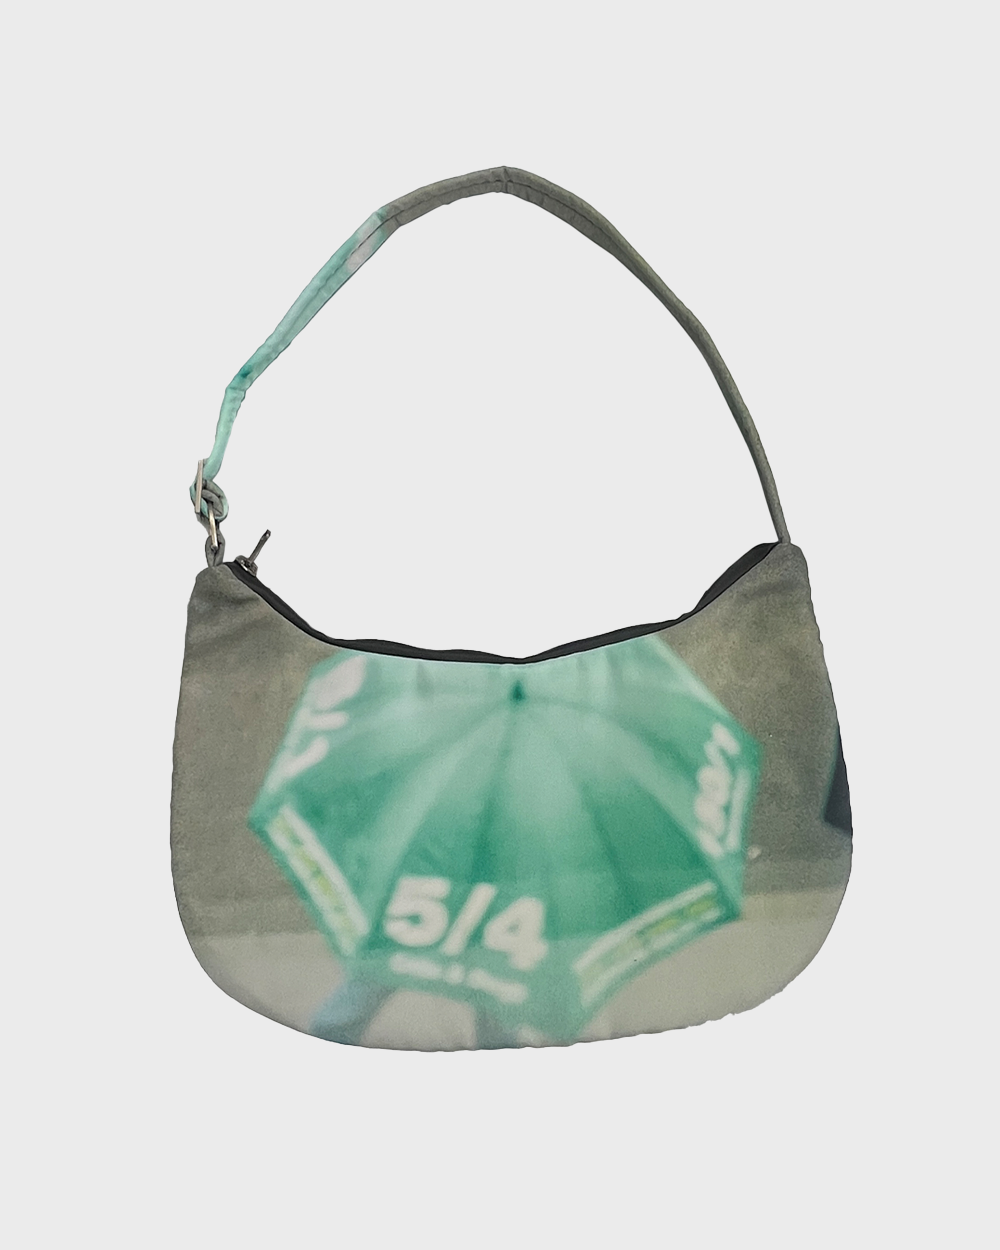 Umberlla Waterproof Bag (Green)